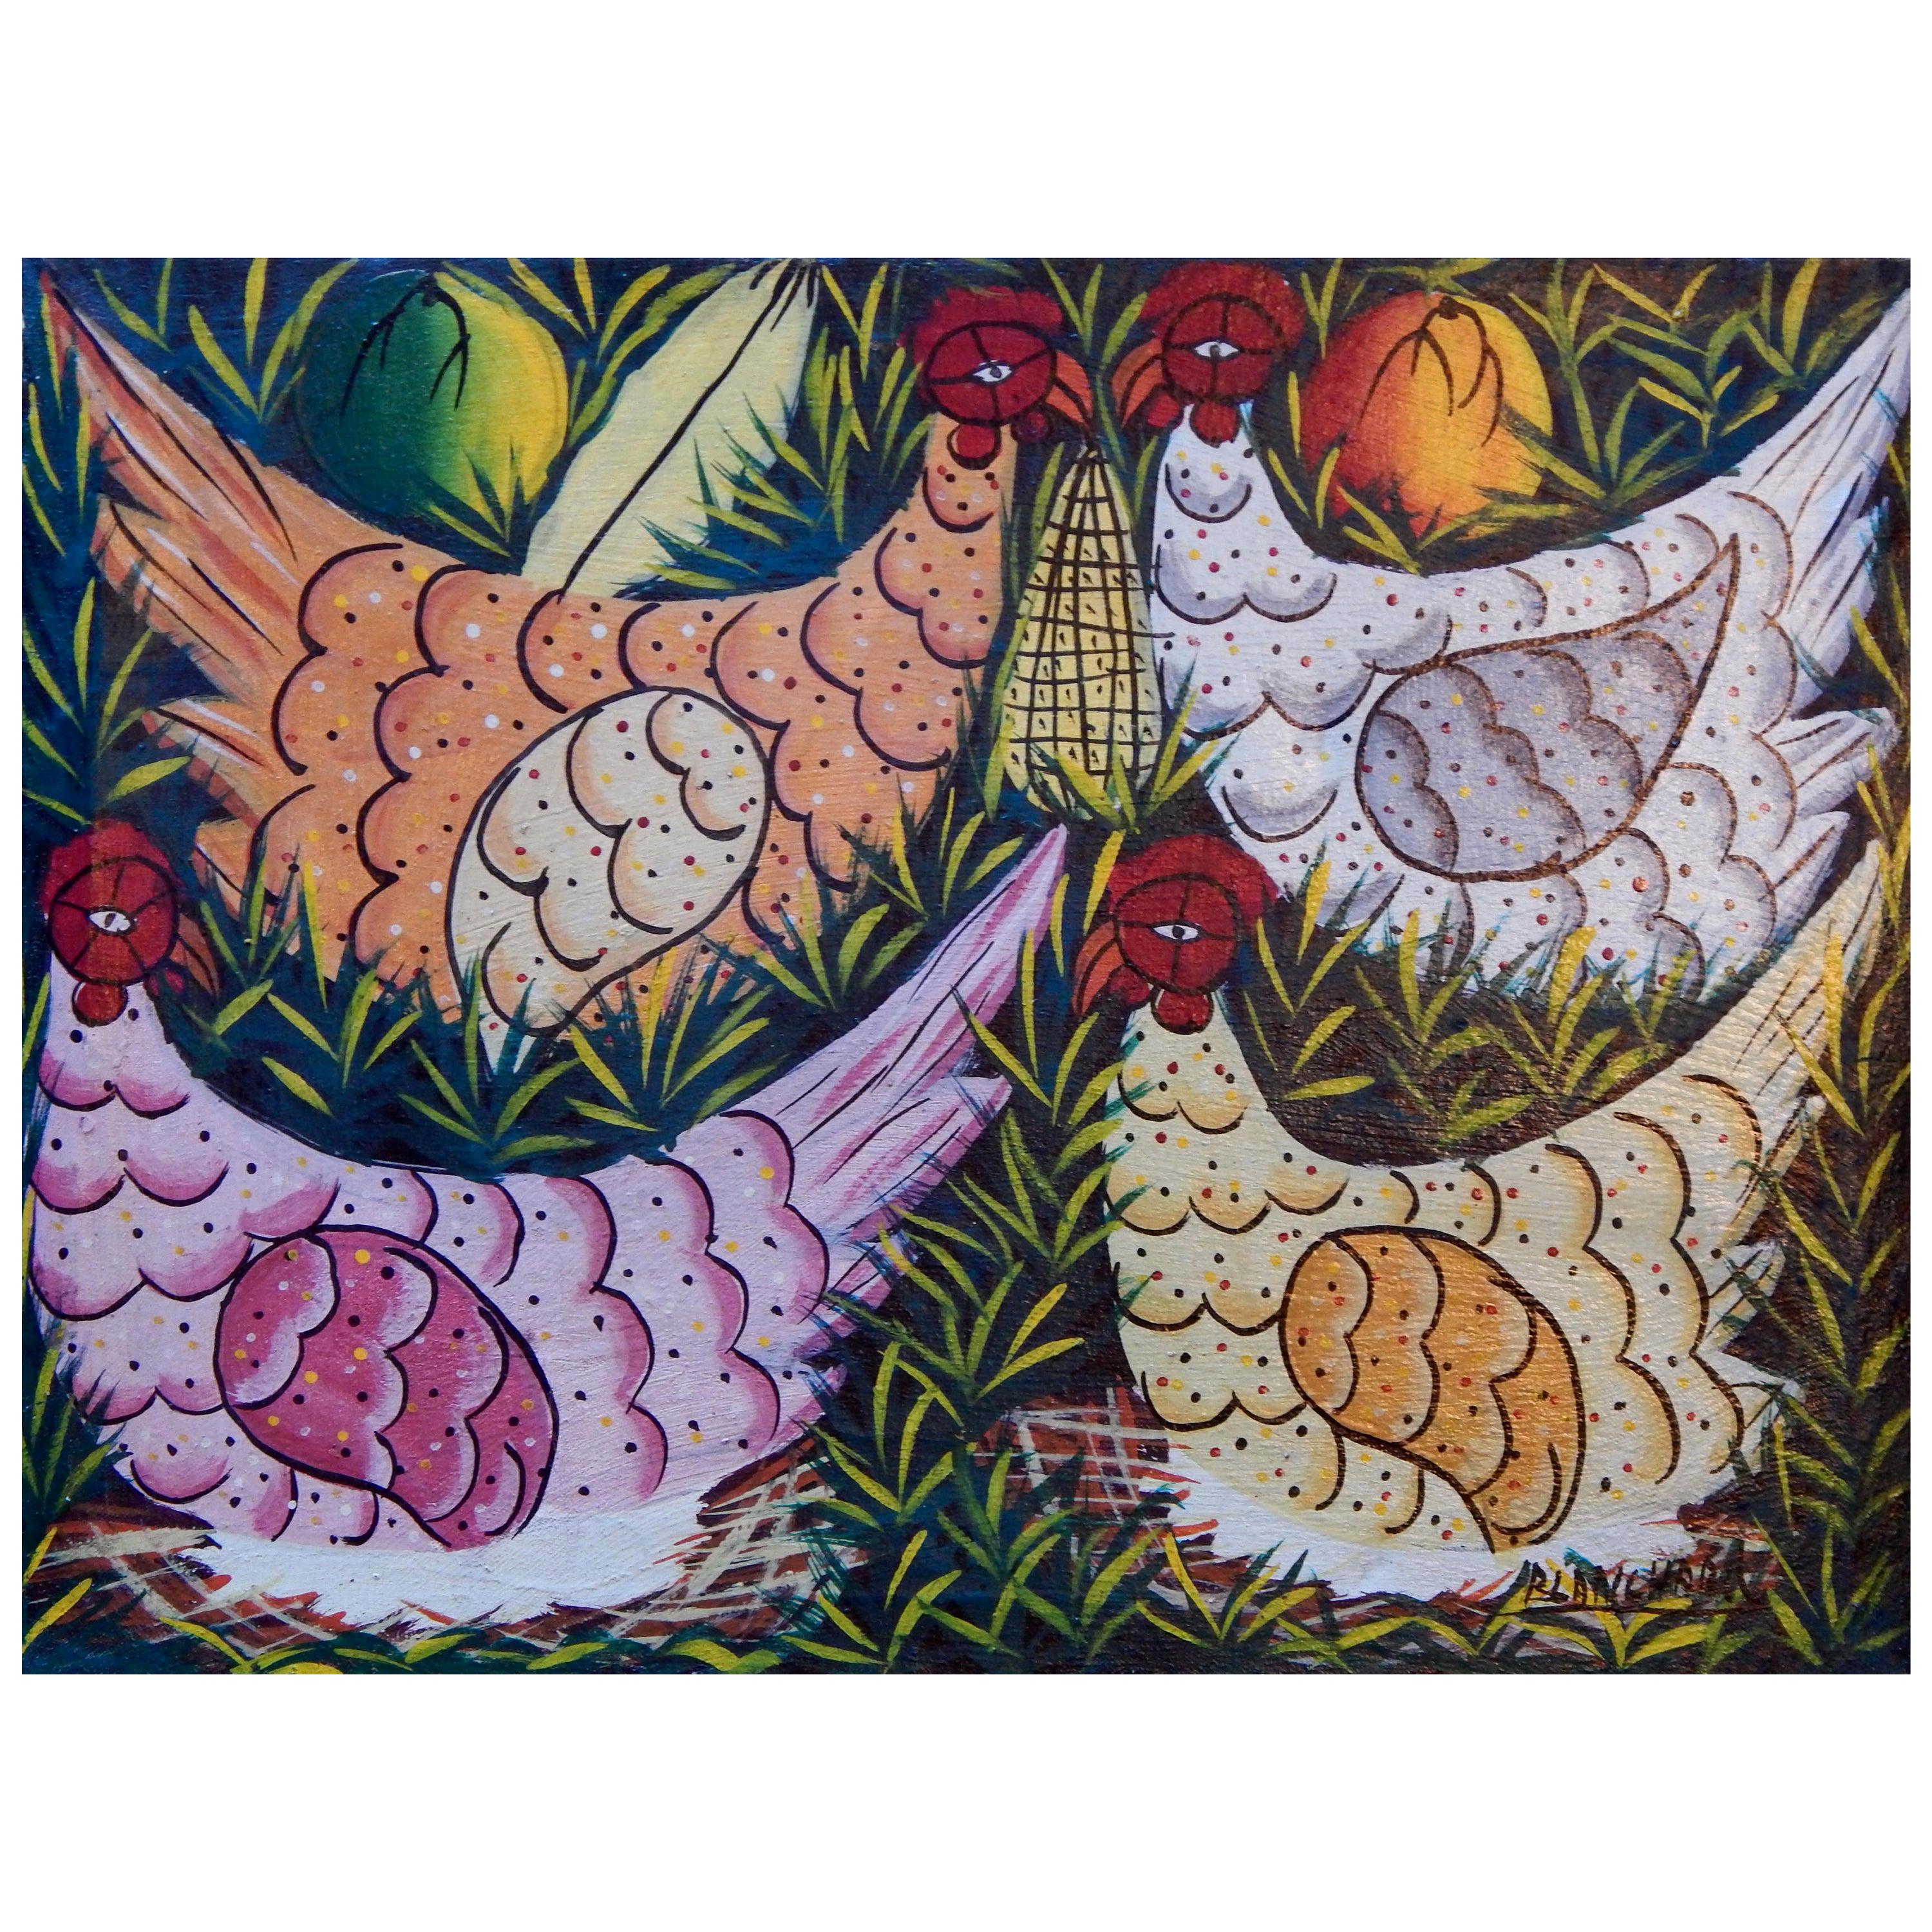 Sisson Blanchard Haitian Folk Art Painting with Chickens